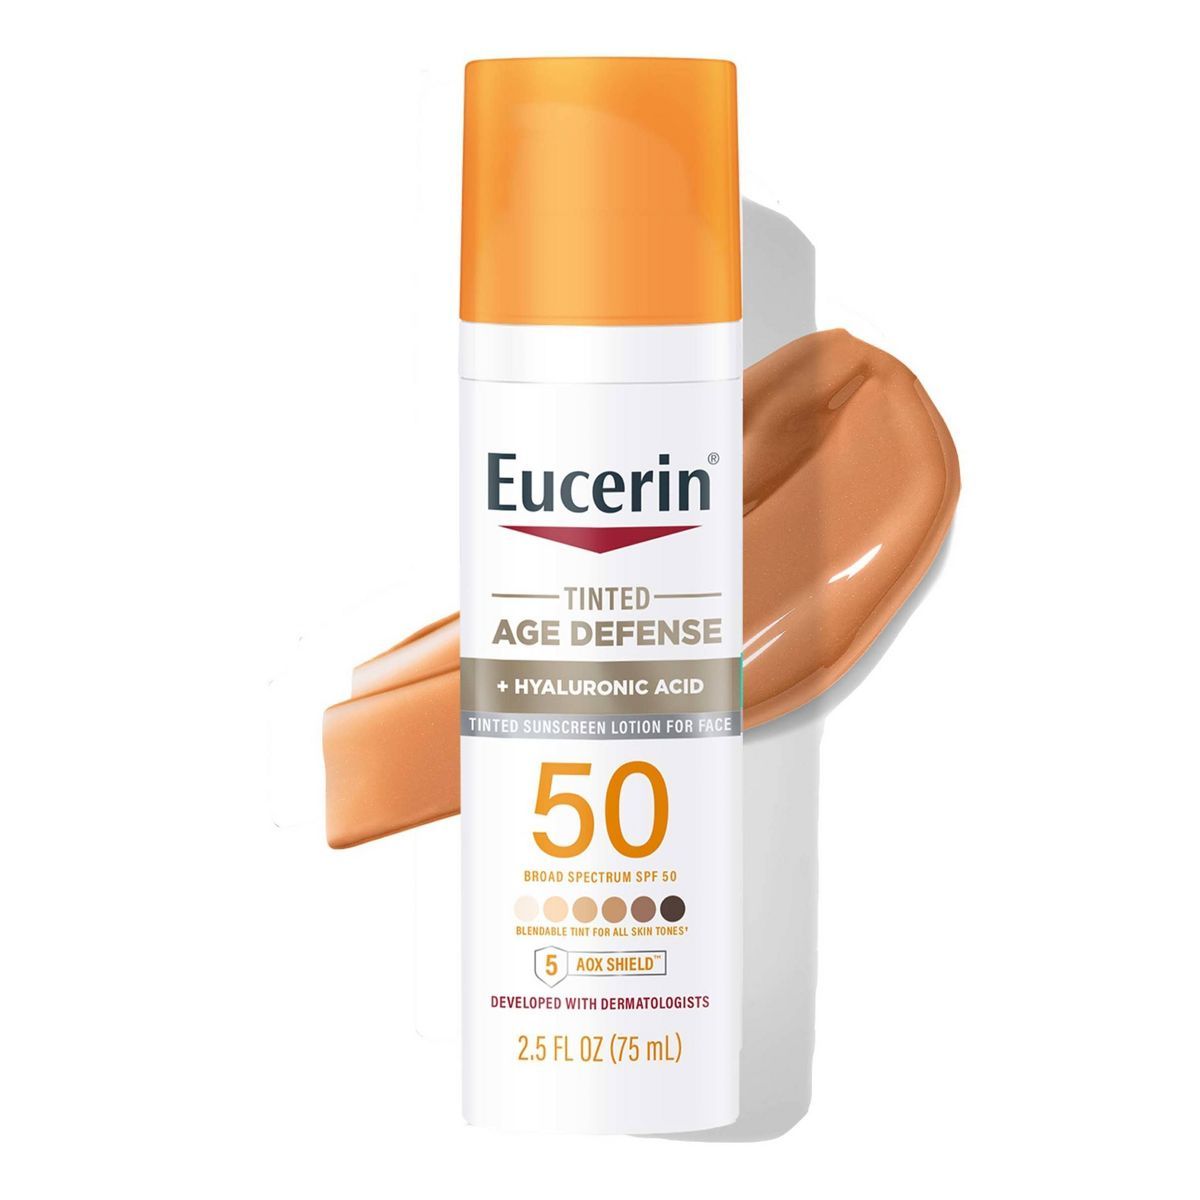 Eucerin Age Defense Face Sunscreen Tinted Lotion - SPF 50 - 2.5 fl oz | Target